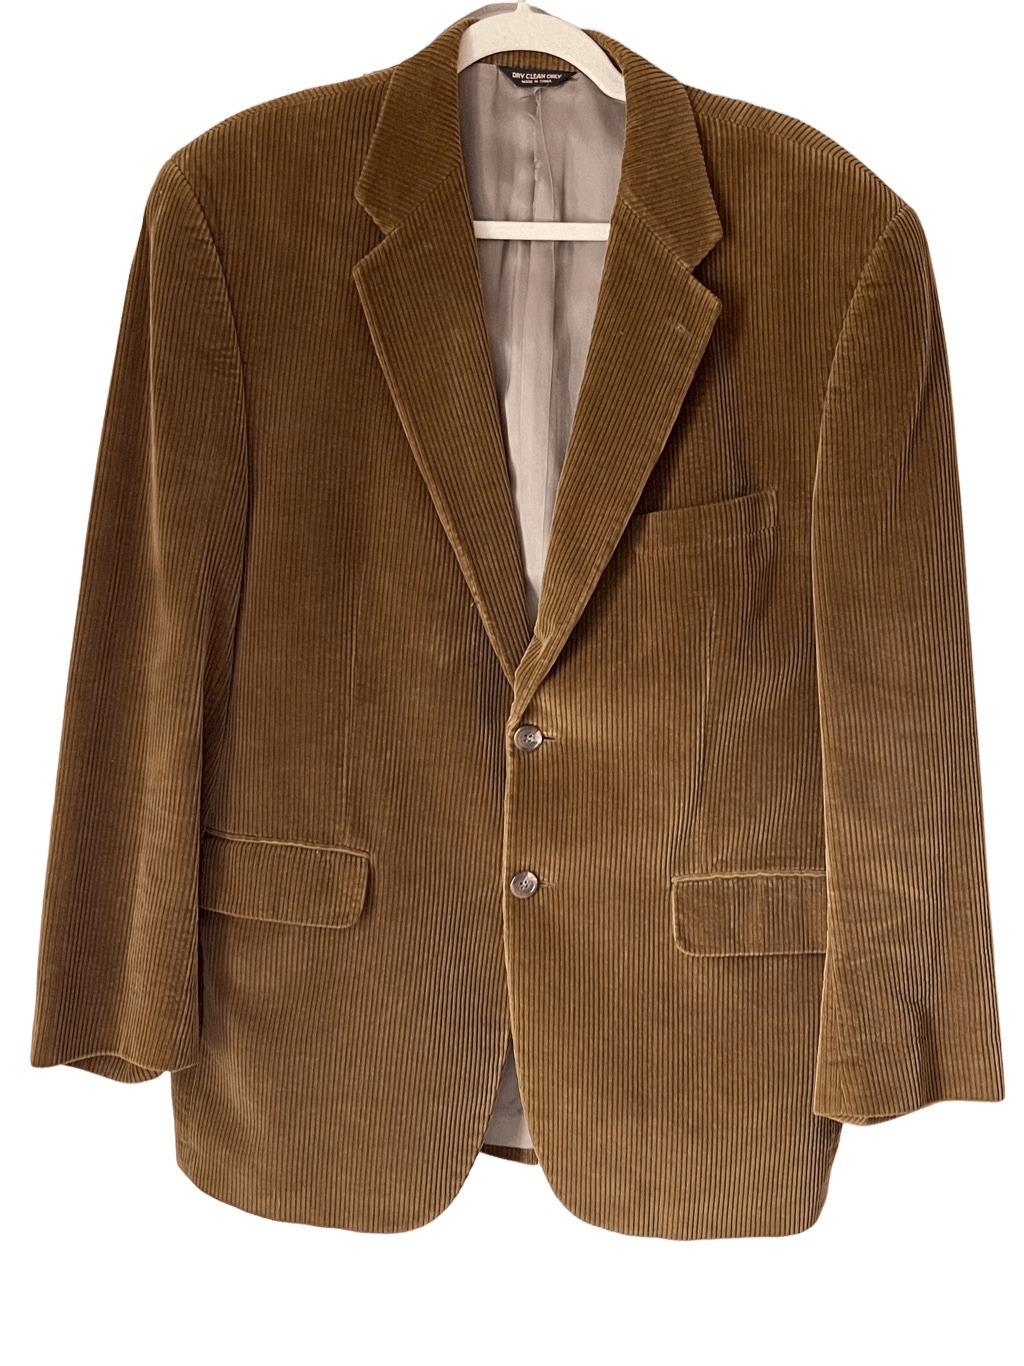 90s Vintage Chaps Ralph Lauren Olive Green Corduroy Blazer Jacket Size 40R  Larg